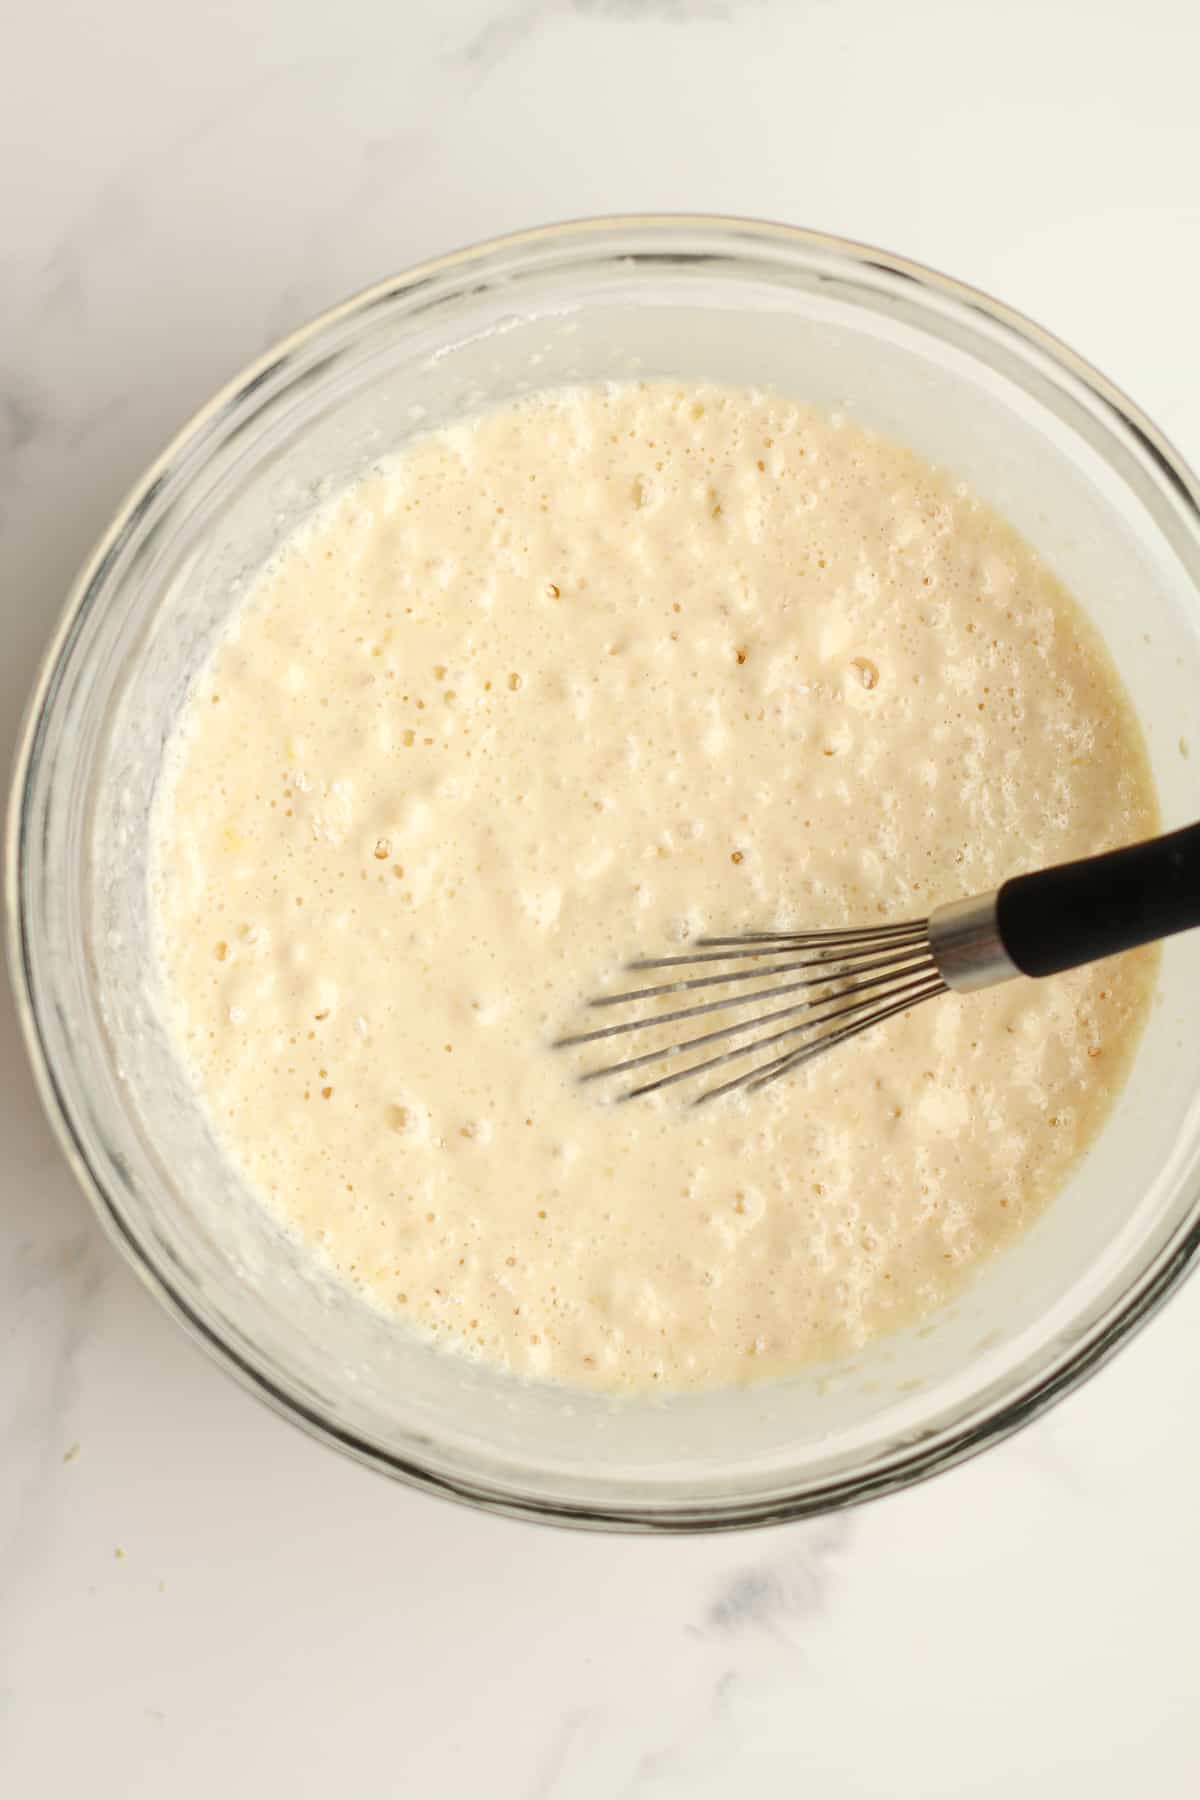 A bowl of the pancake batter.